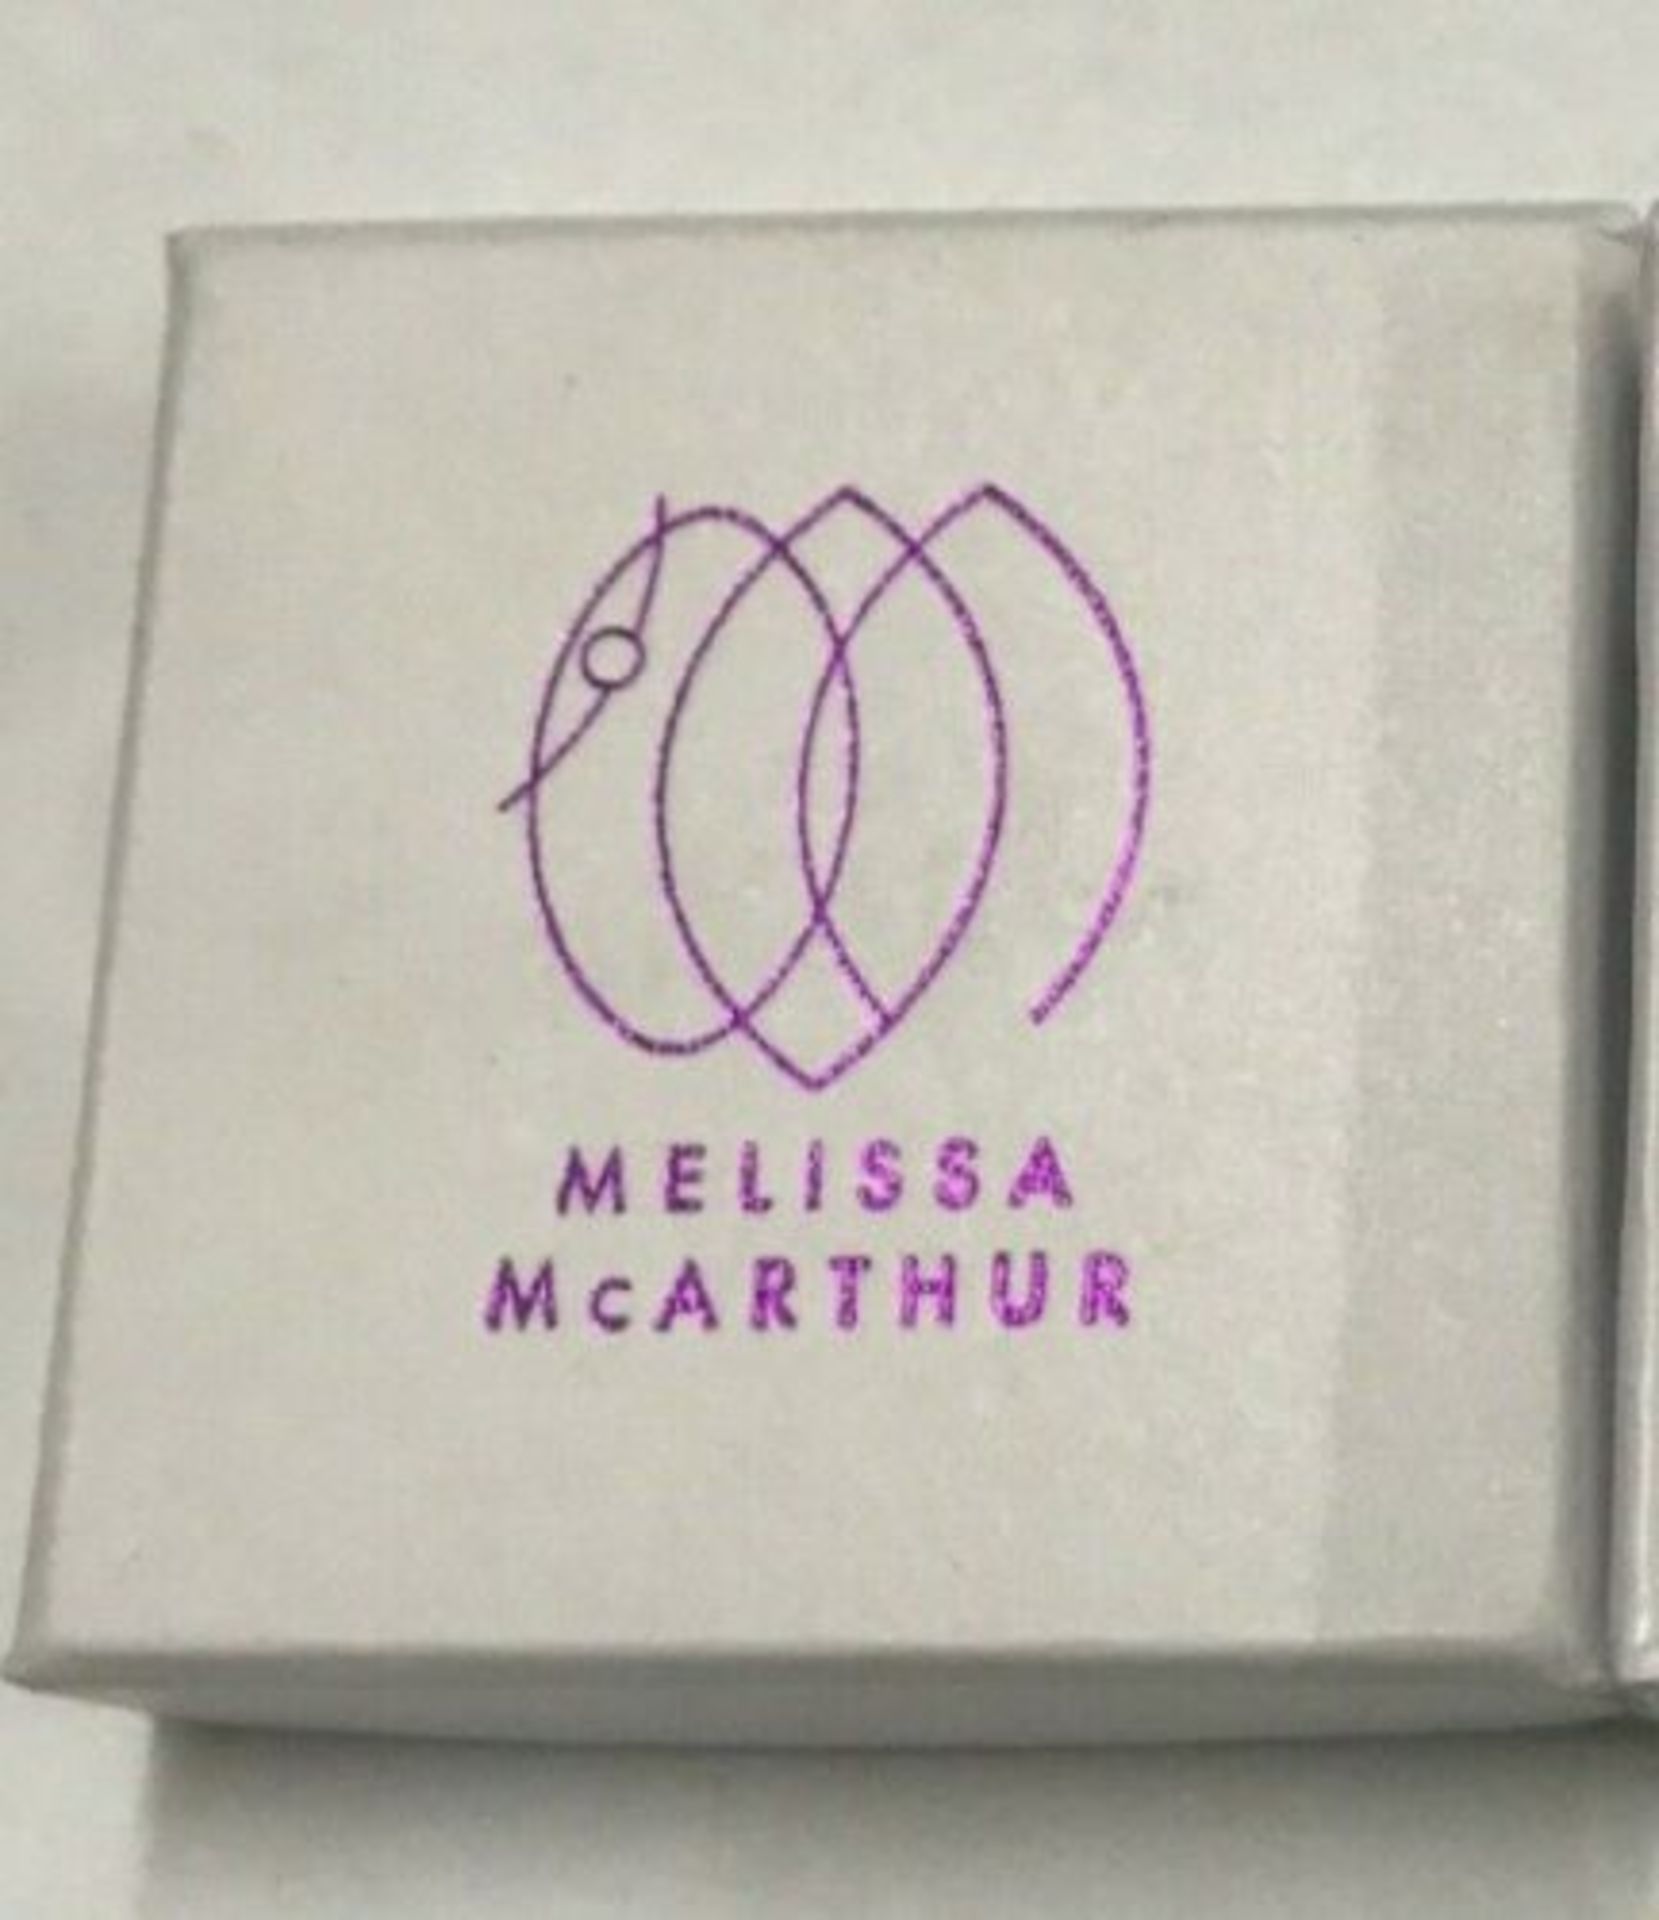 Melissa Mcarthur sterling silver quartz pendant necklace - Image 3 of 3